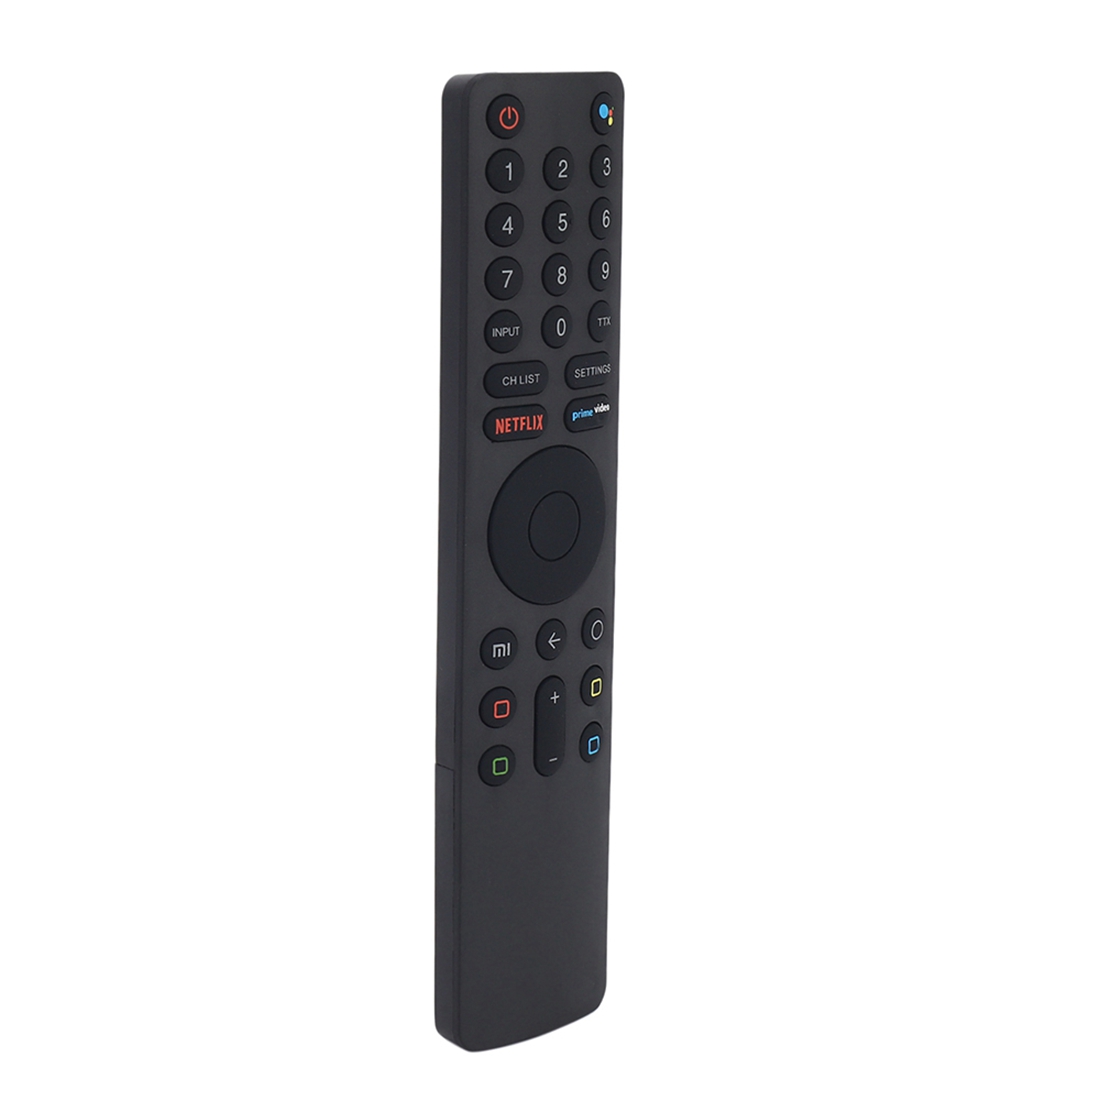 ریموت کنترل تلویزیون شیائومی مدل Voice Remote Control